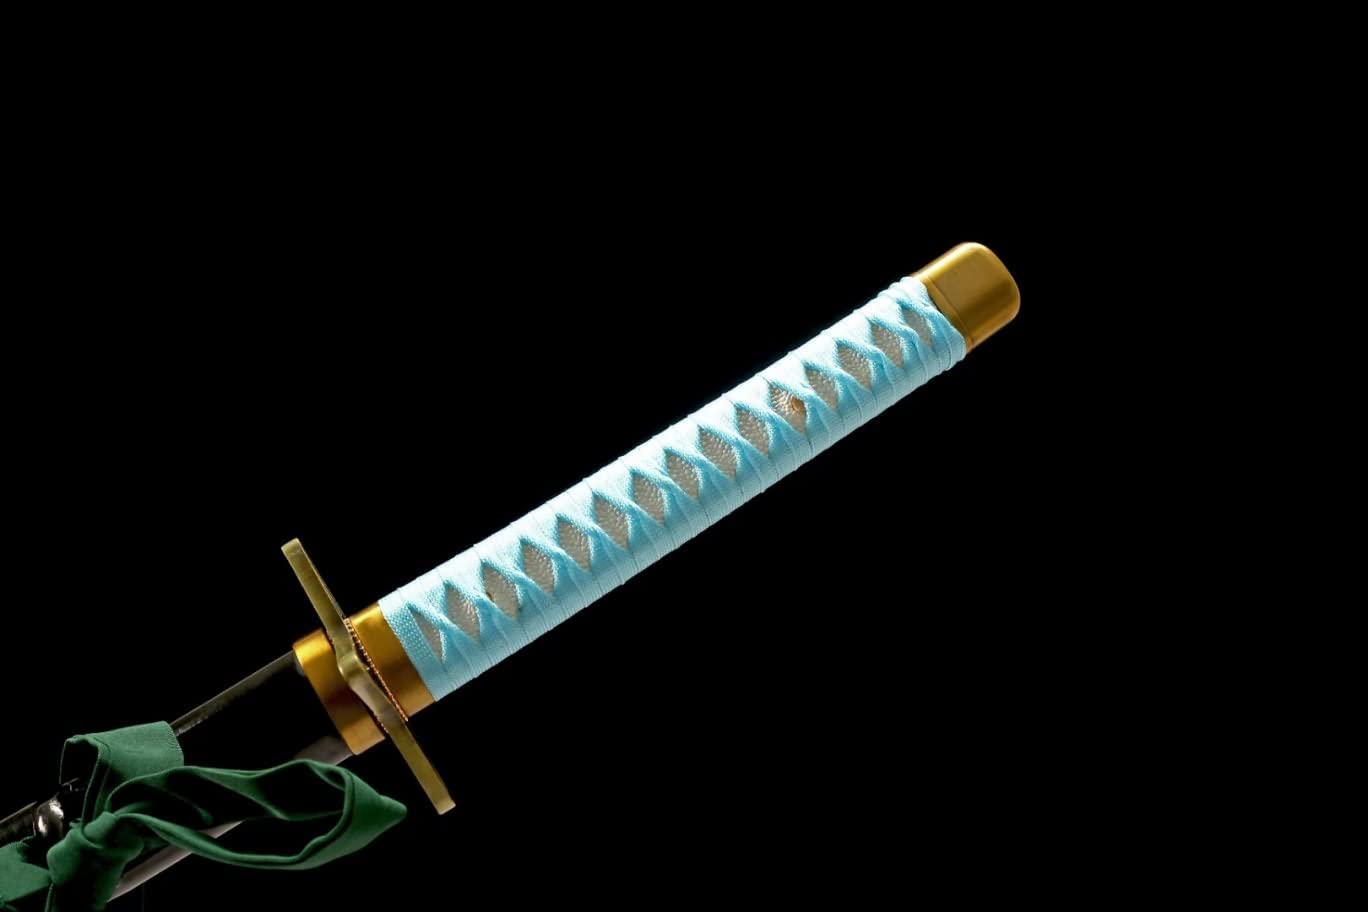 Samurai Katana Cosplay Sword with Alloy Fittings, Ideal for Kendo